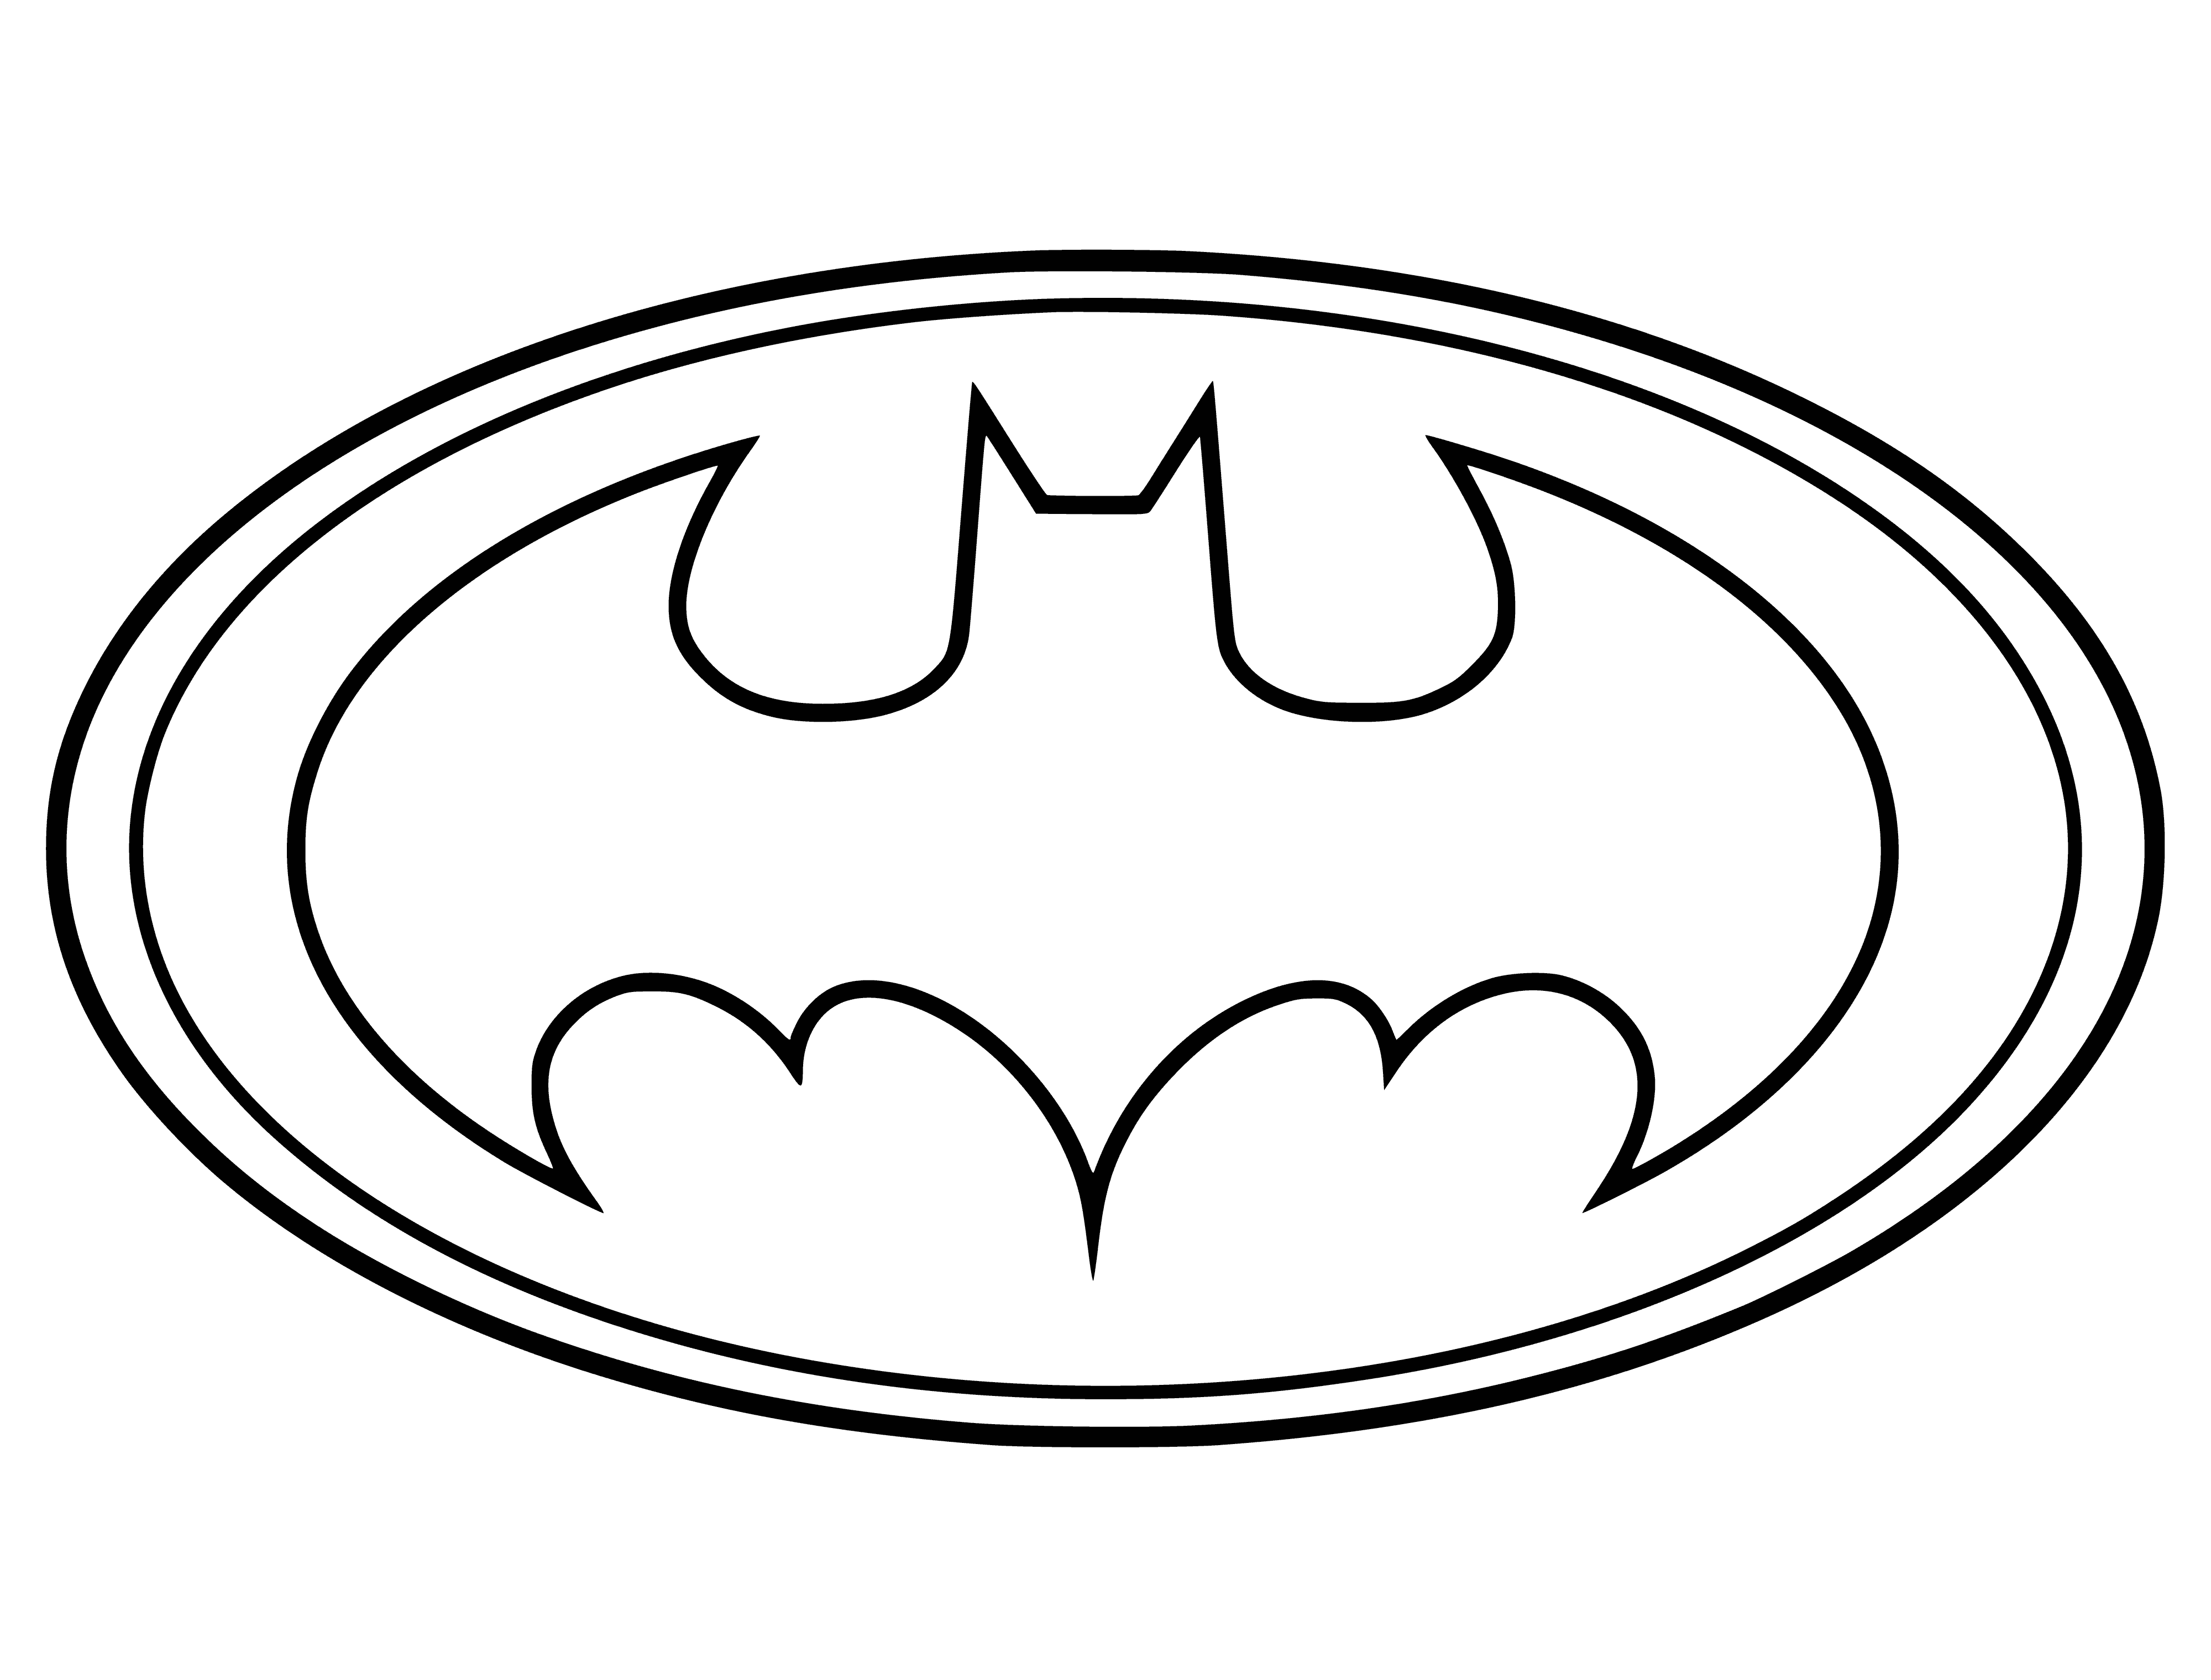 Batman sign coloring page